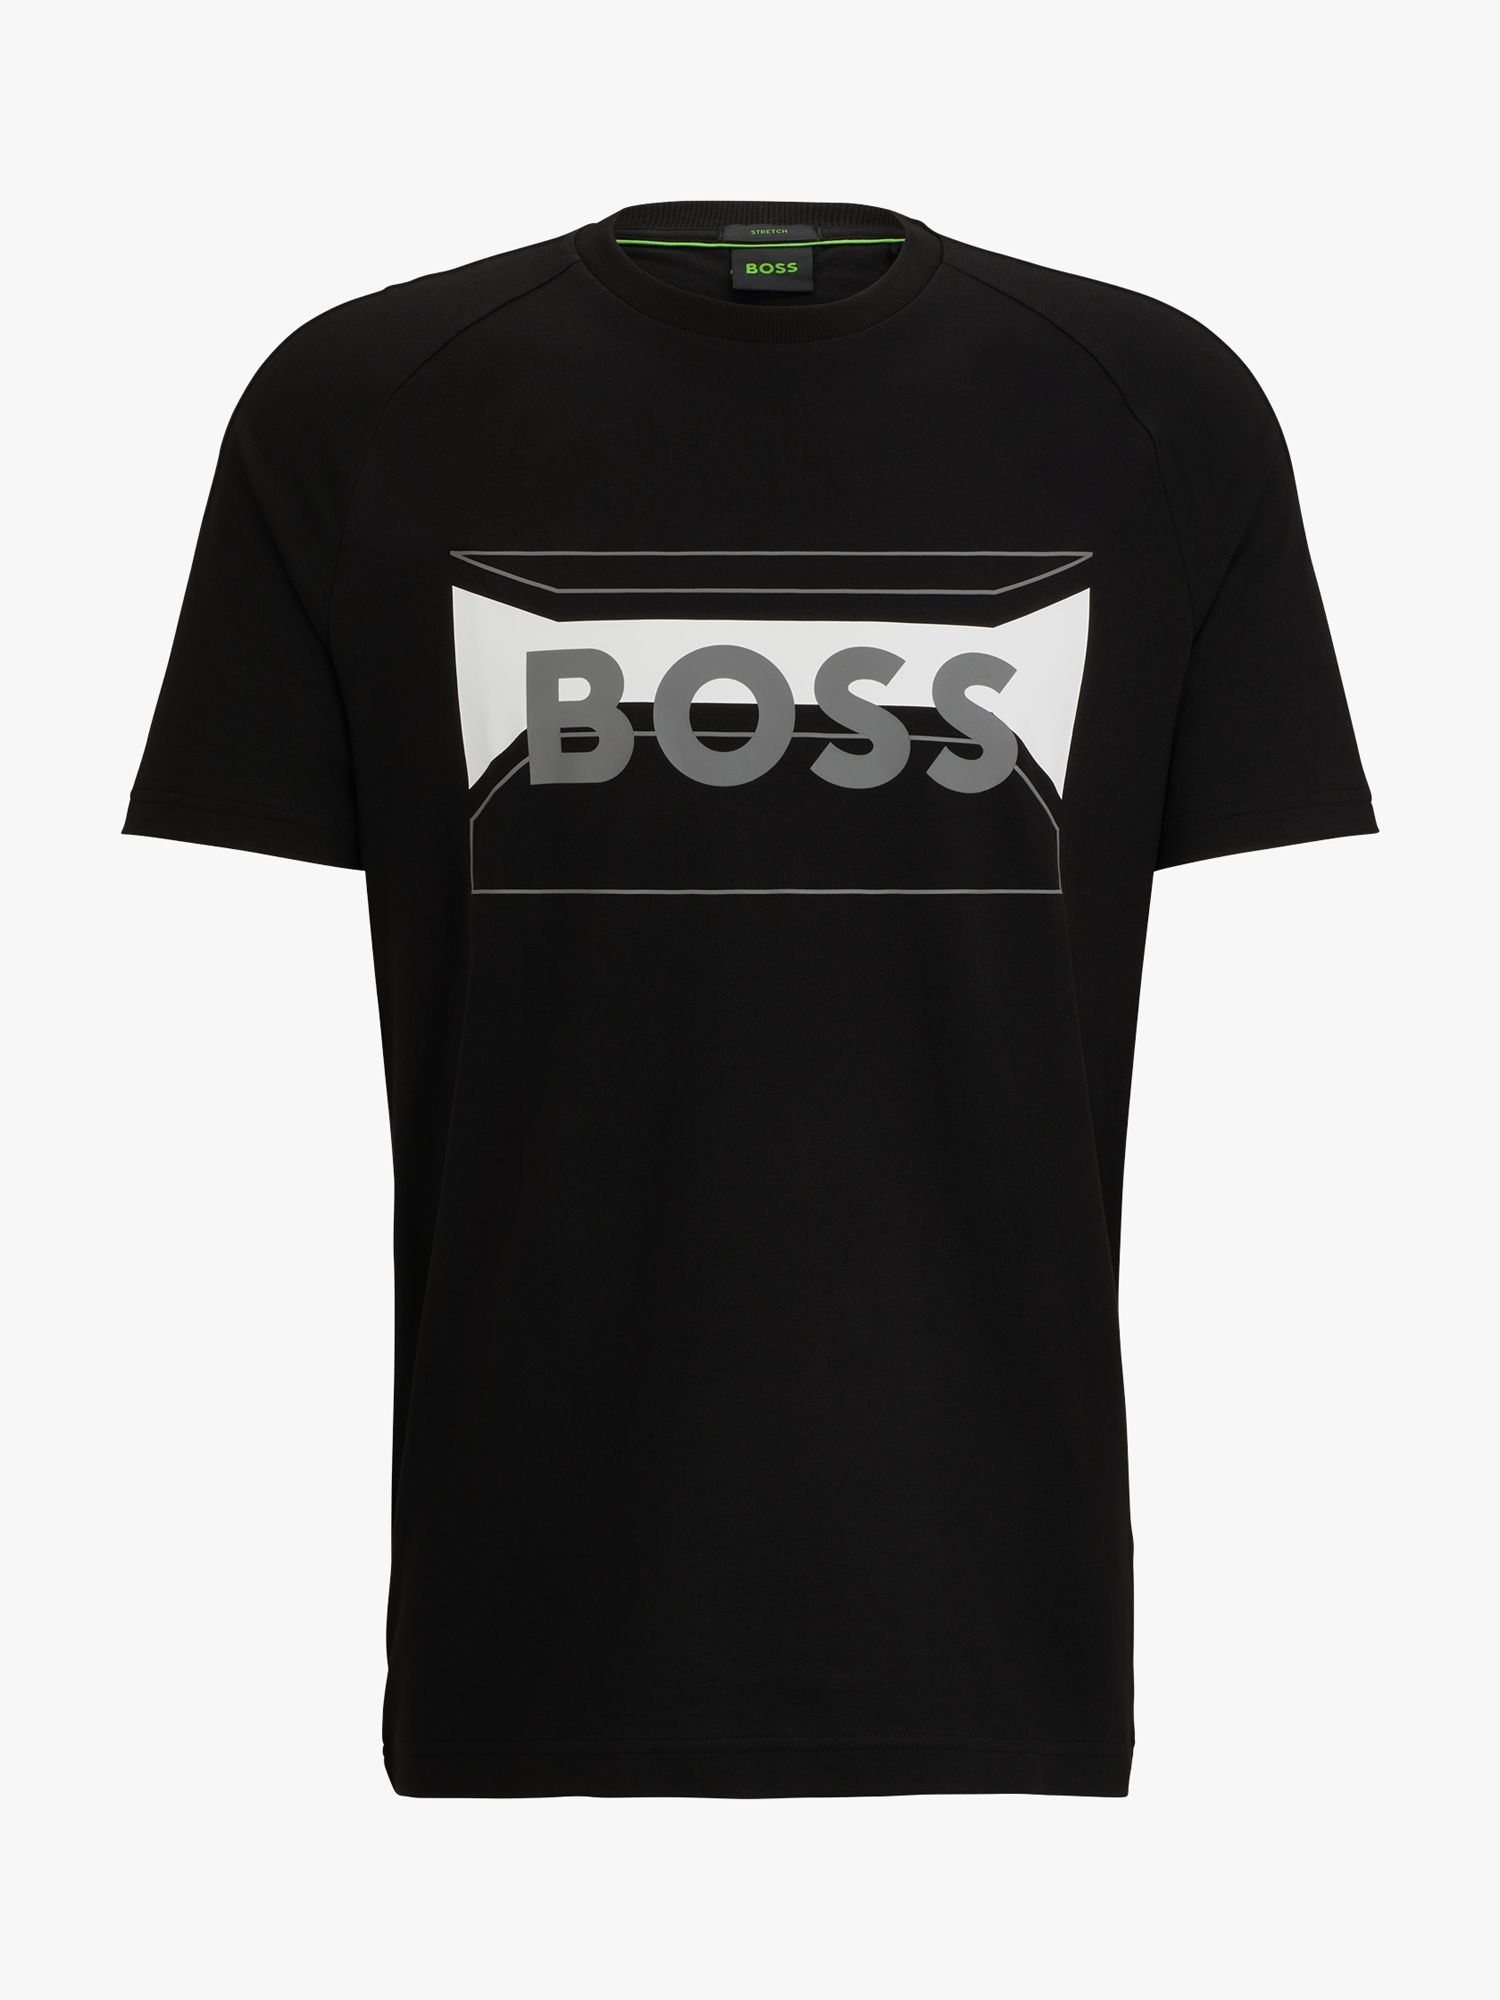 BOSS Tee 2 Short Sleeve T-Shirt, Black, M